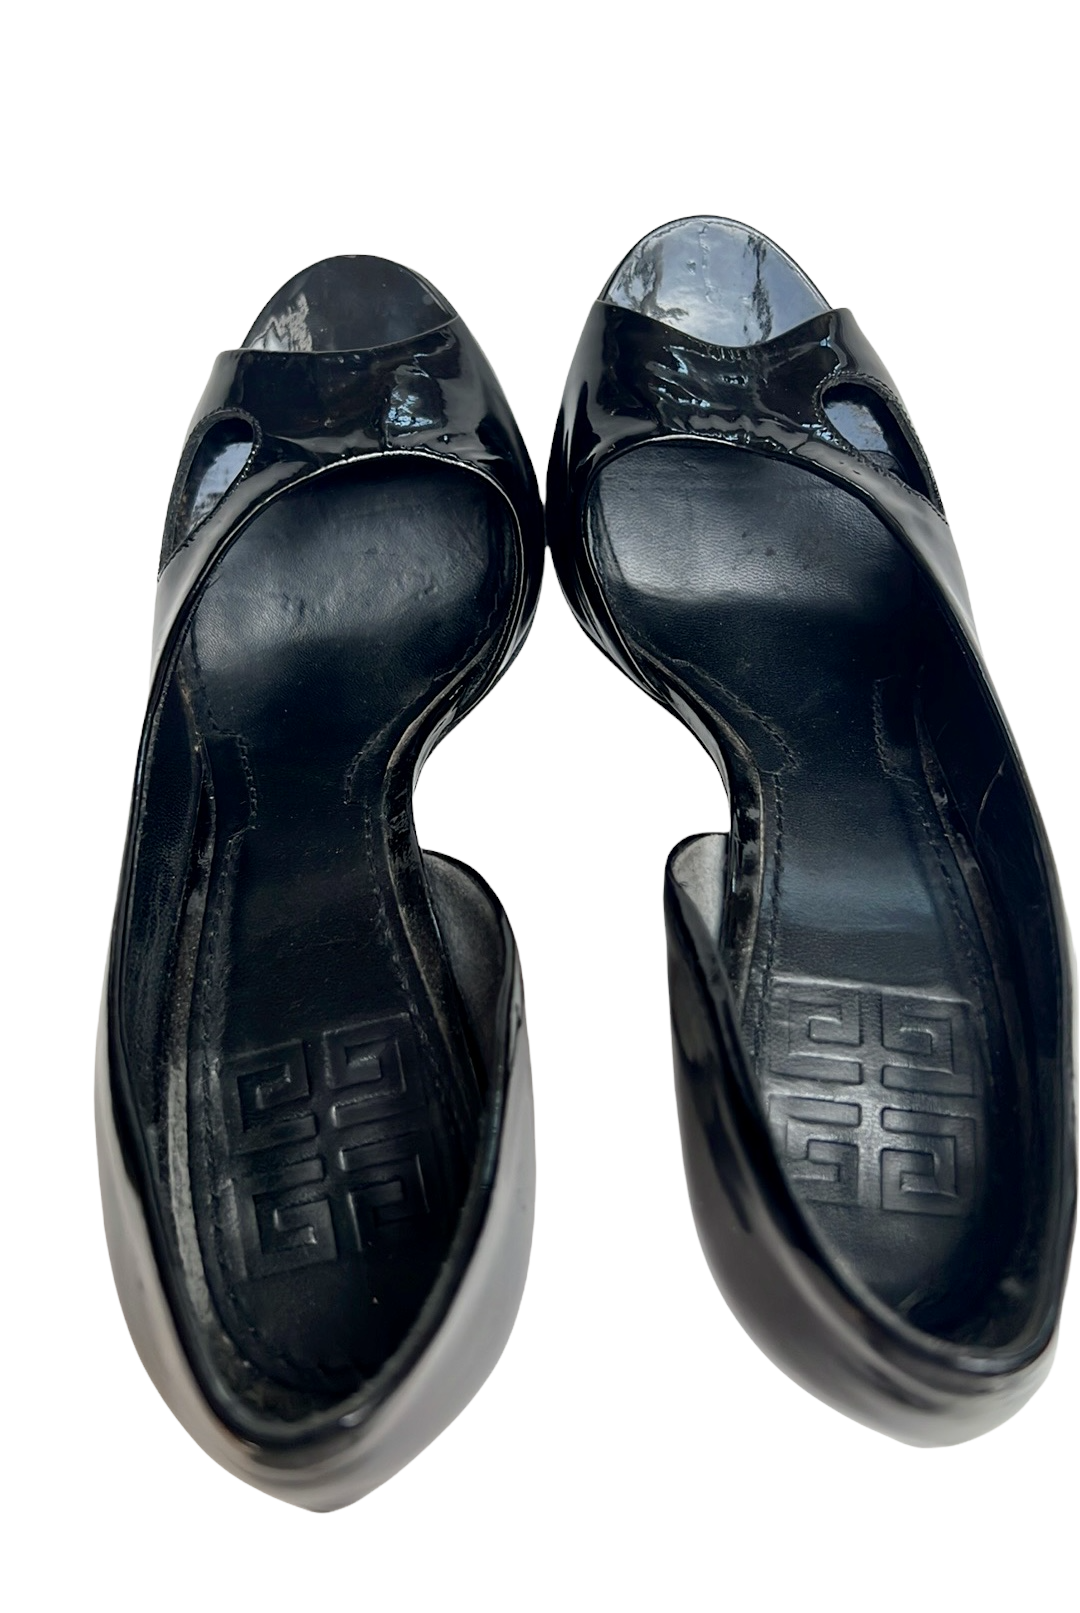 Black Patent Heels - 7.5